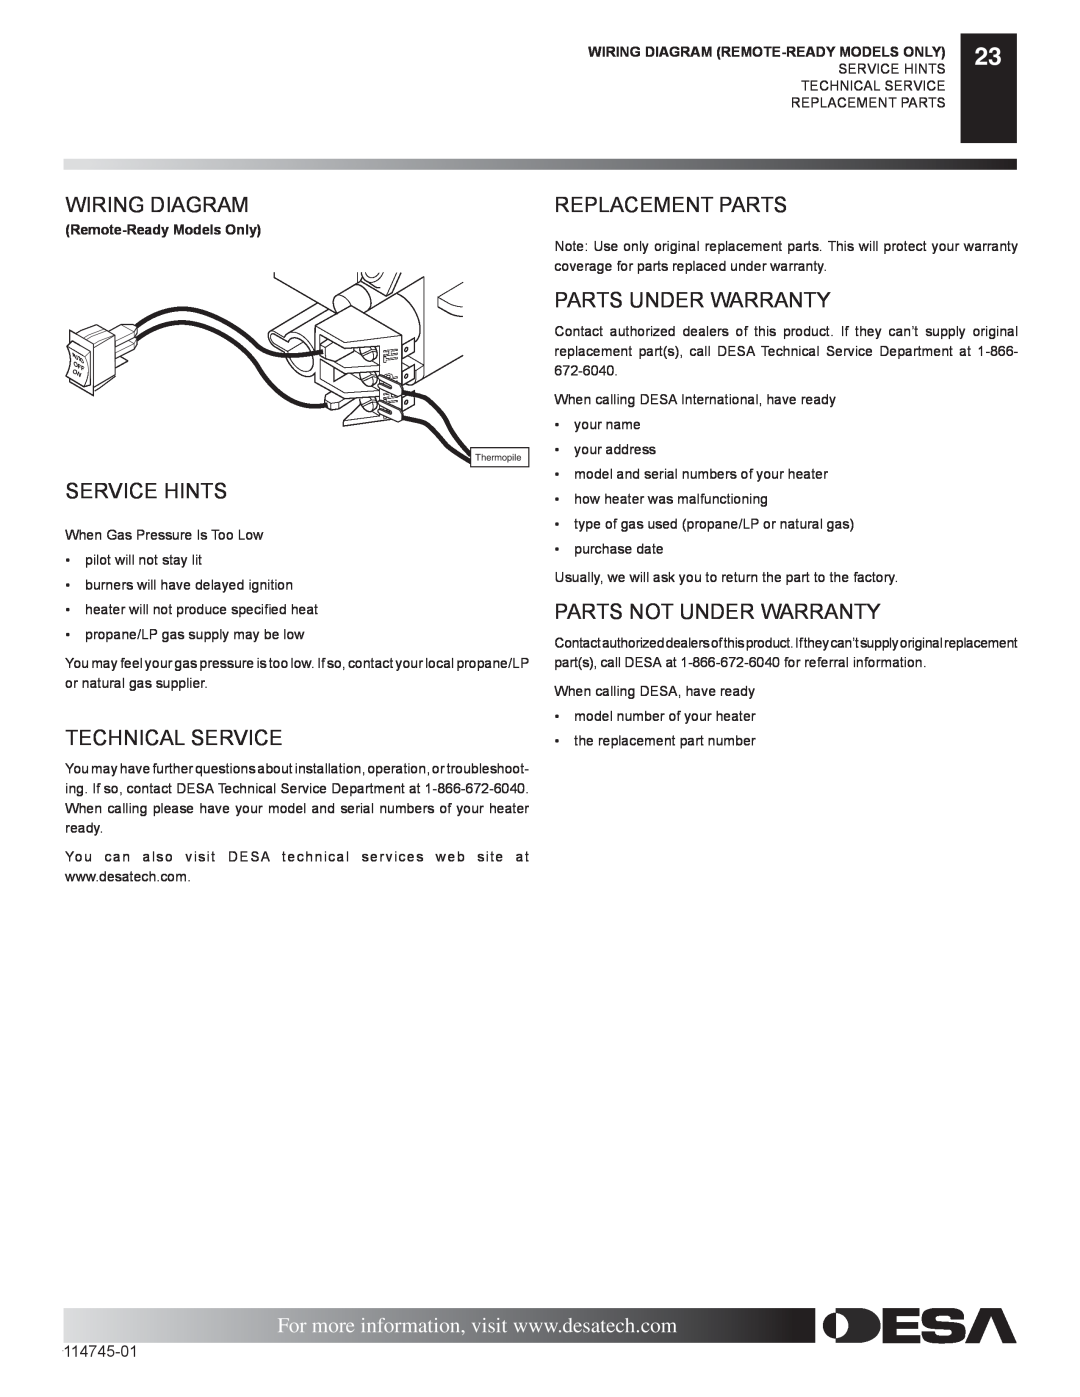 Desa VFRMV24NA, VFRMV18NA Wiring Diagram, Service Hints, Technical Service, Replacement Parts, Parts Under Warranty 